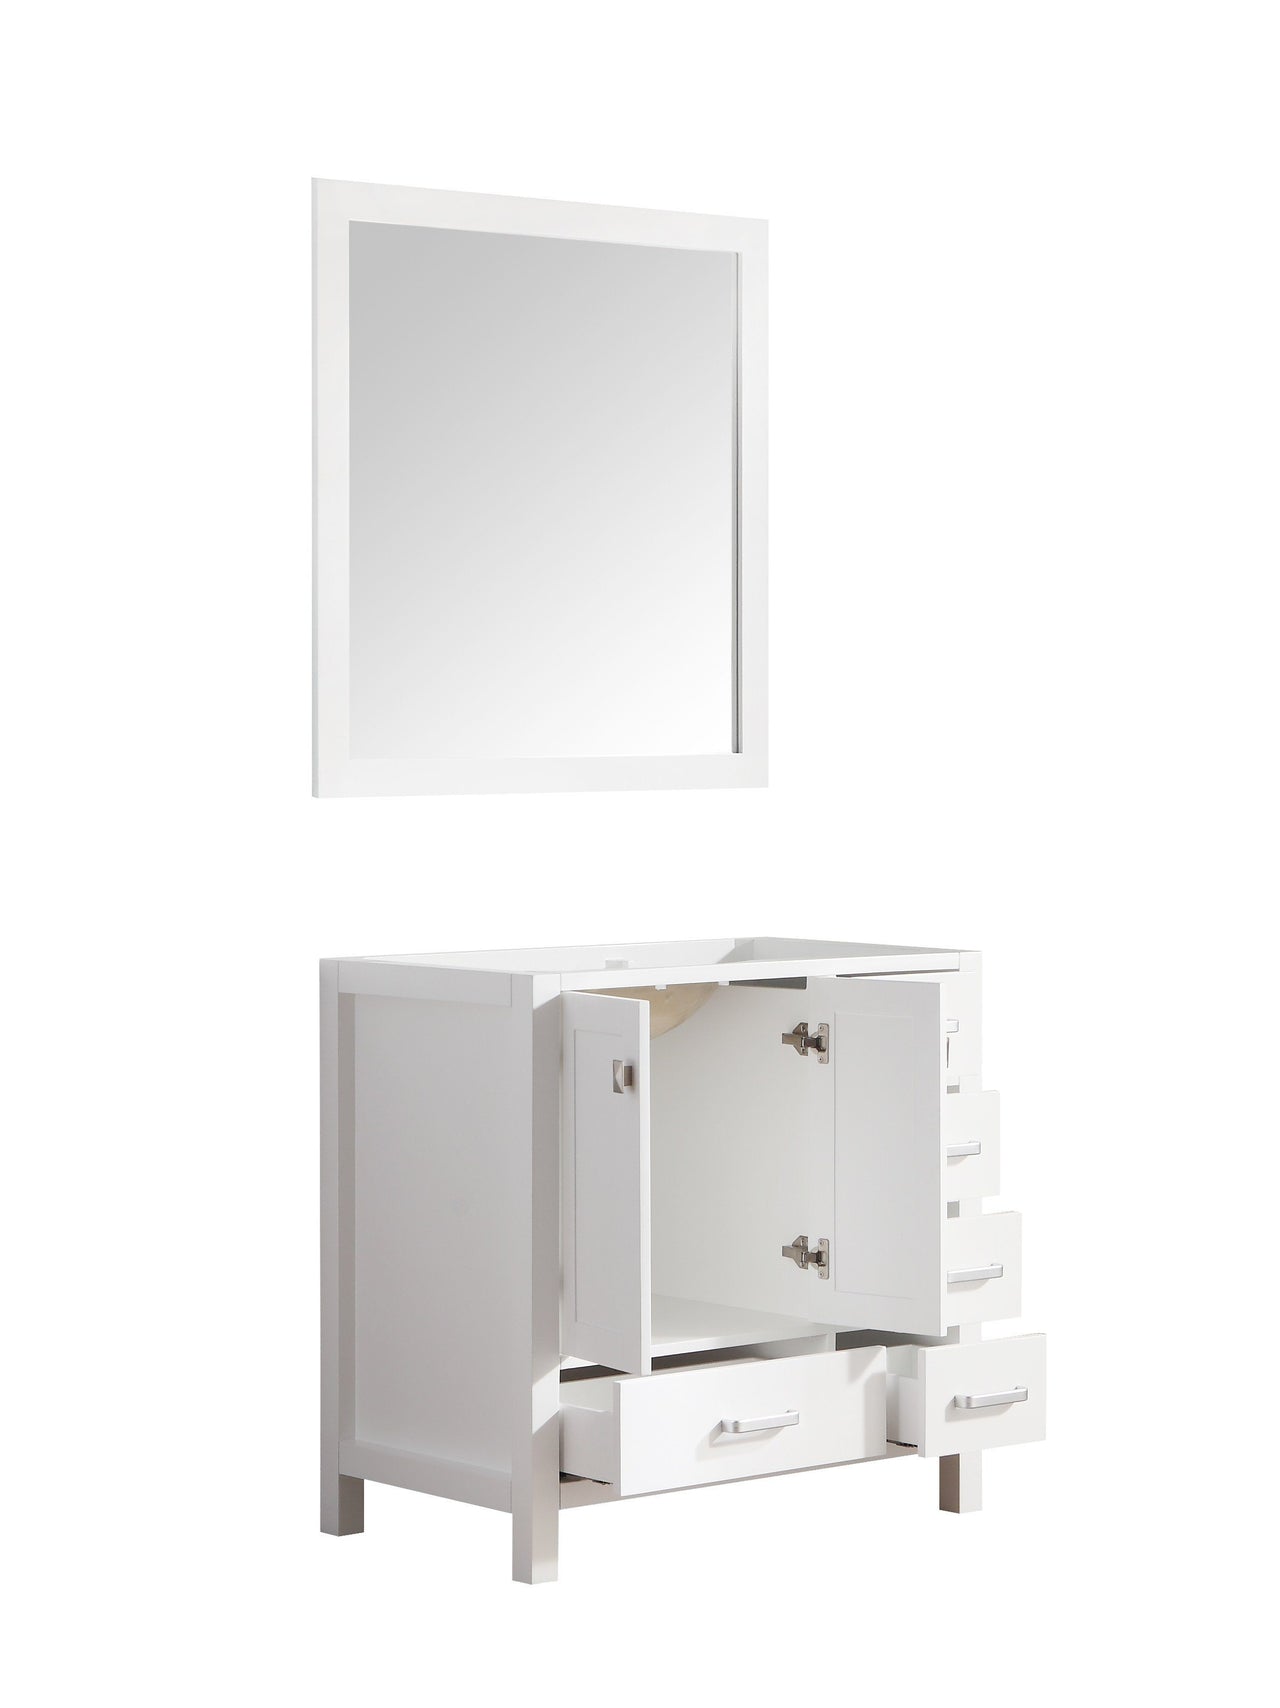 ANZZI Chateau Series V-CHG011-36 Bathroom Vanity Set Vanity ANZZI 